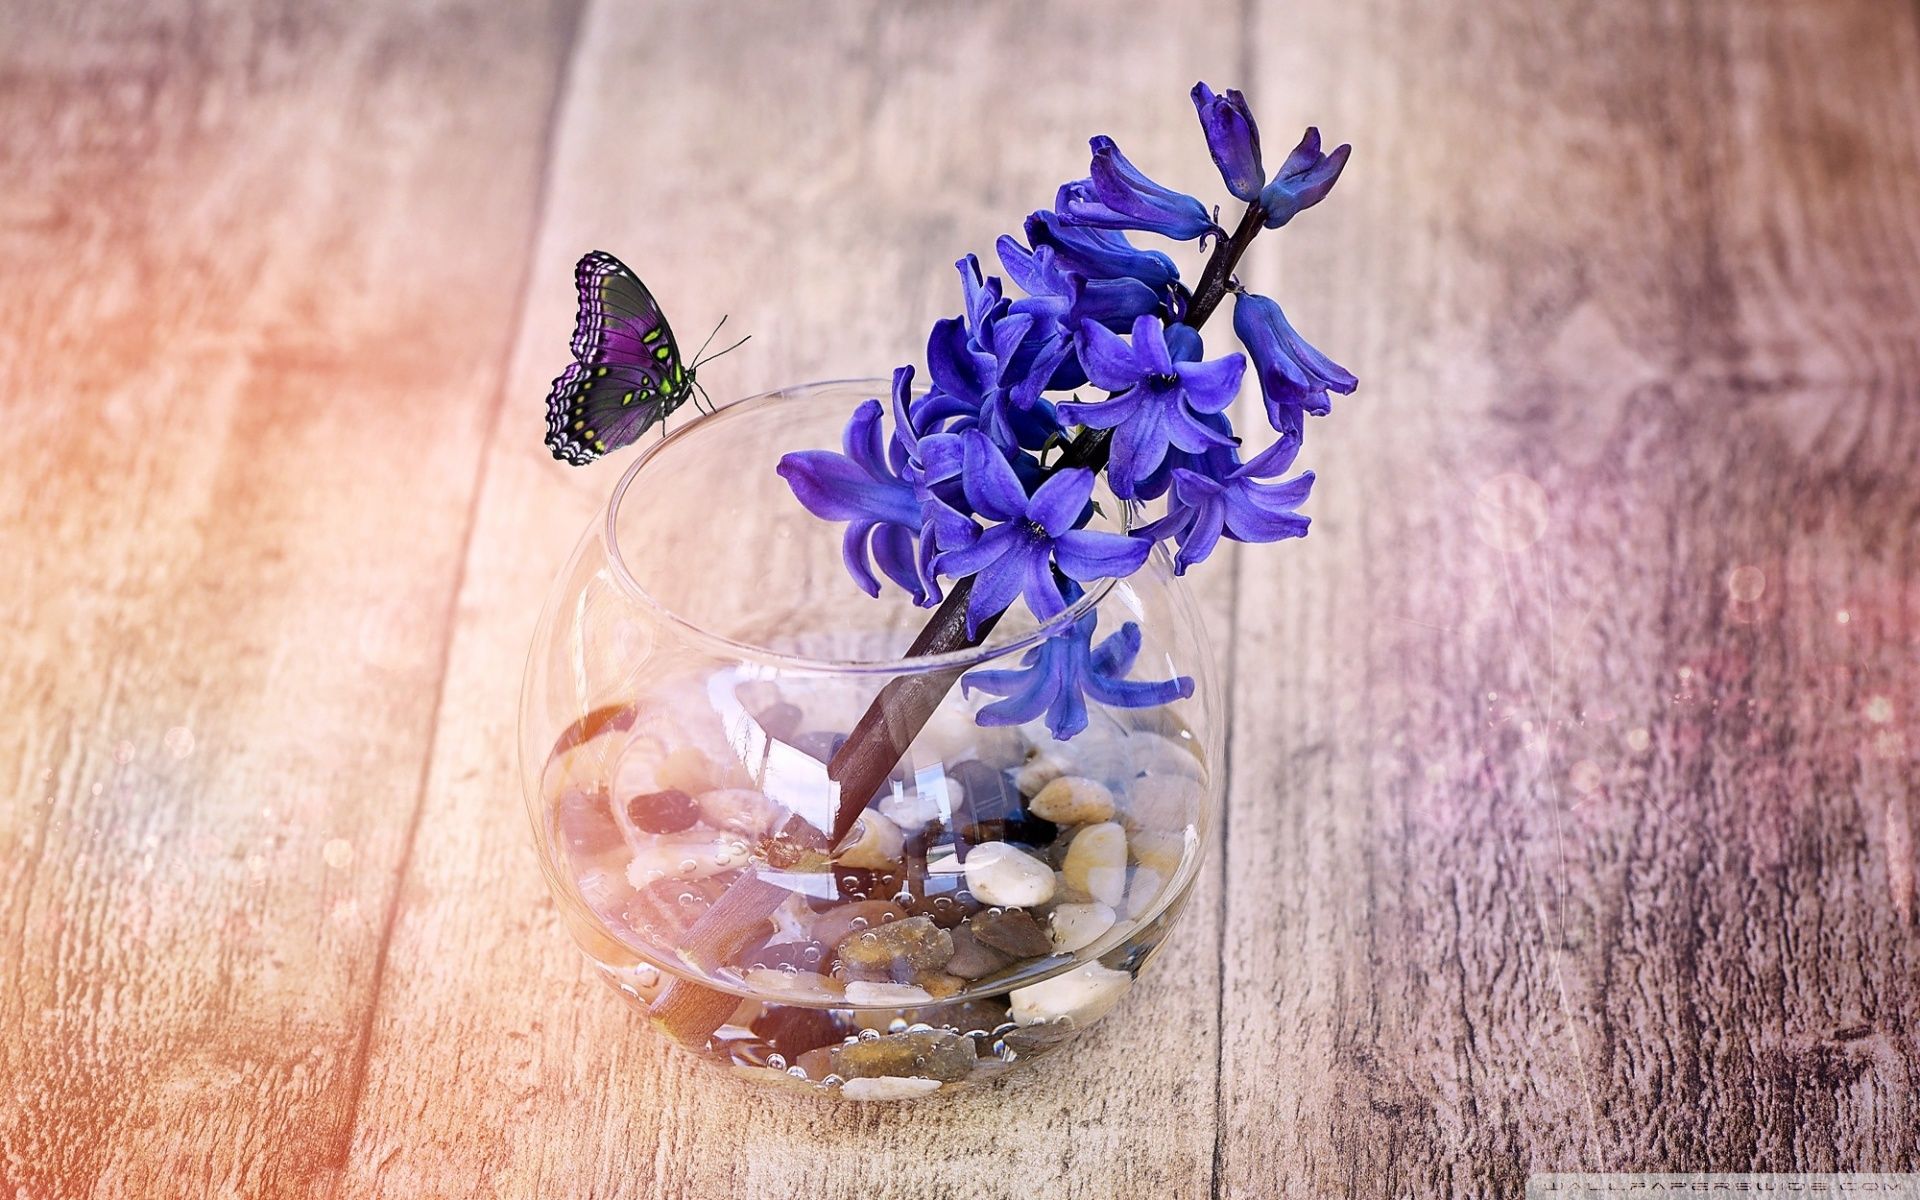 A Spring Hyacinth Flower In Glass Vase Ultra HD Desktop Background Wallpaper for 4K UHD TV, Widescreen & UltraWide Desktop & Laptop, Tablet